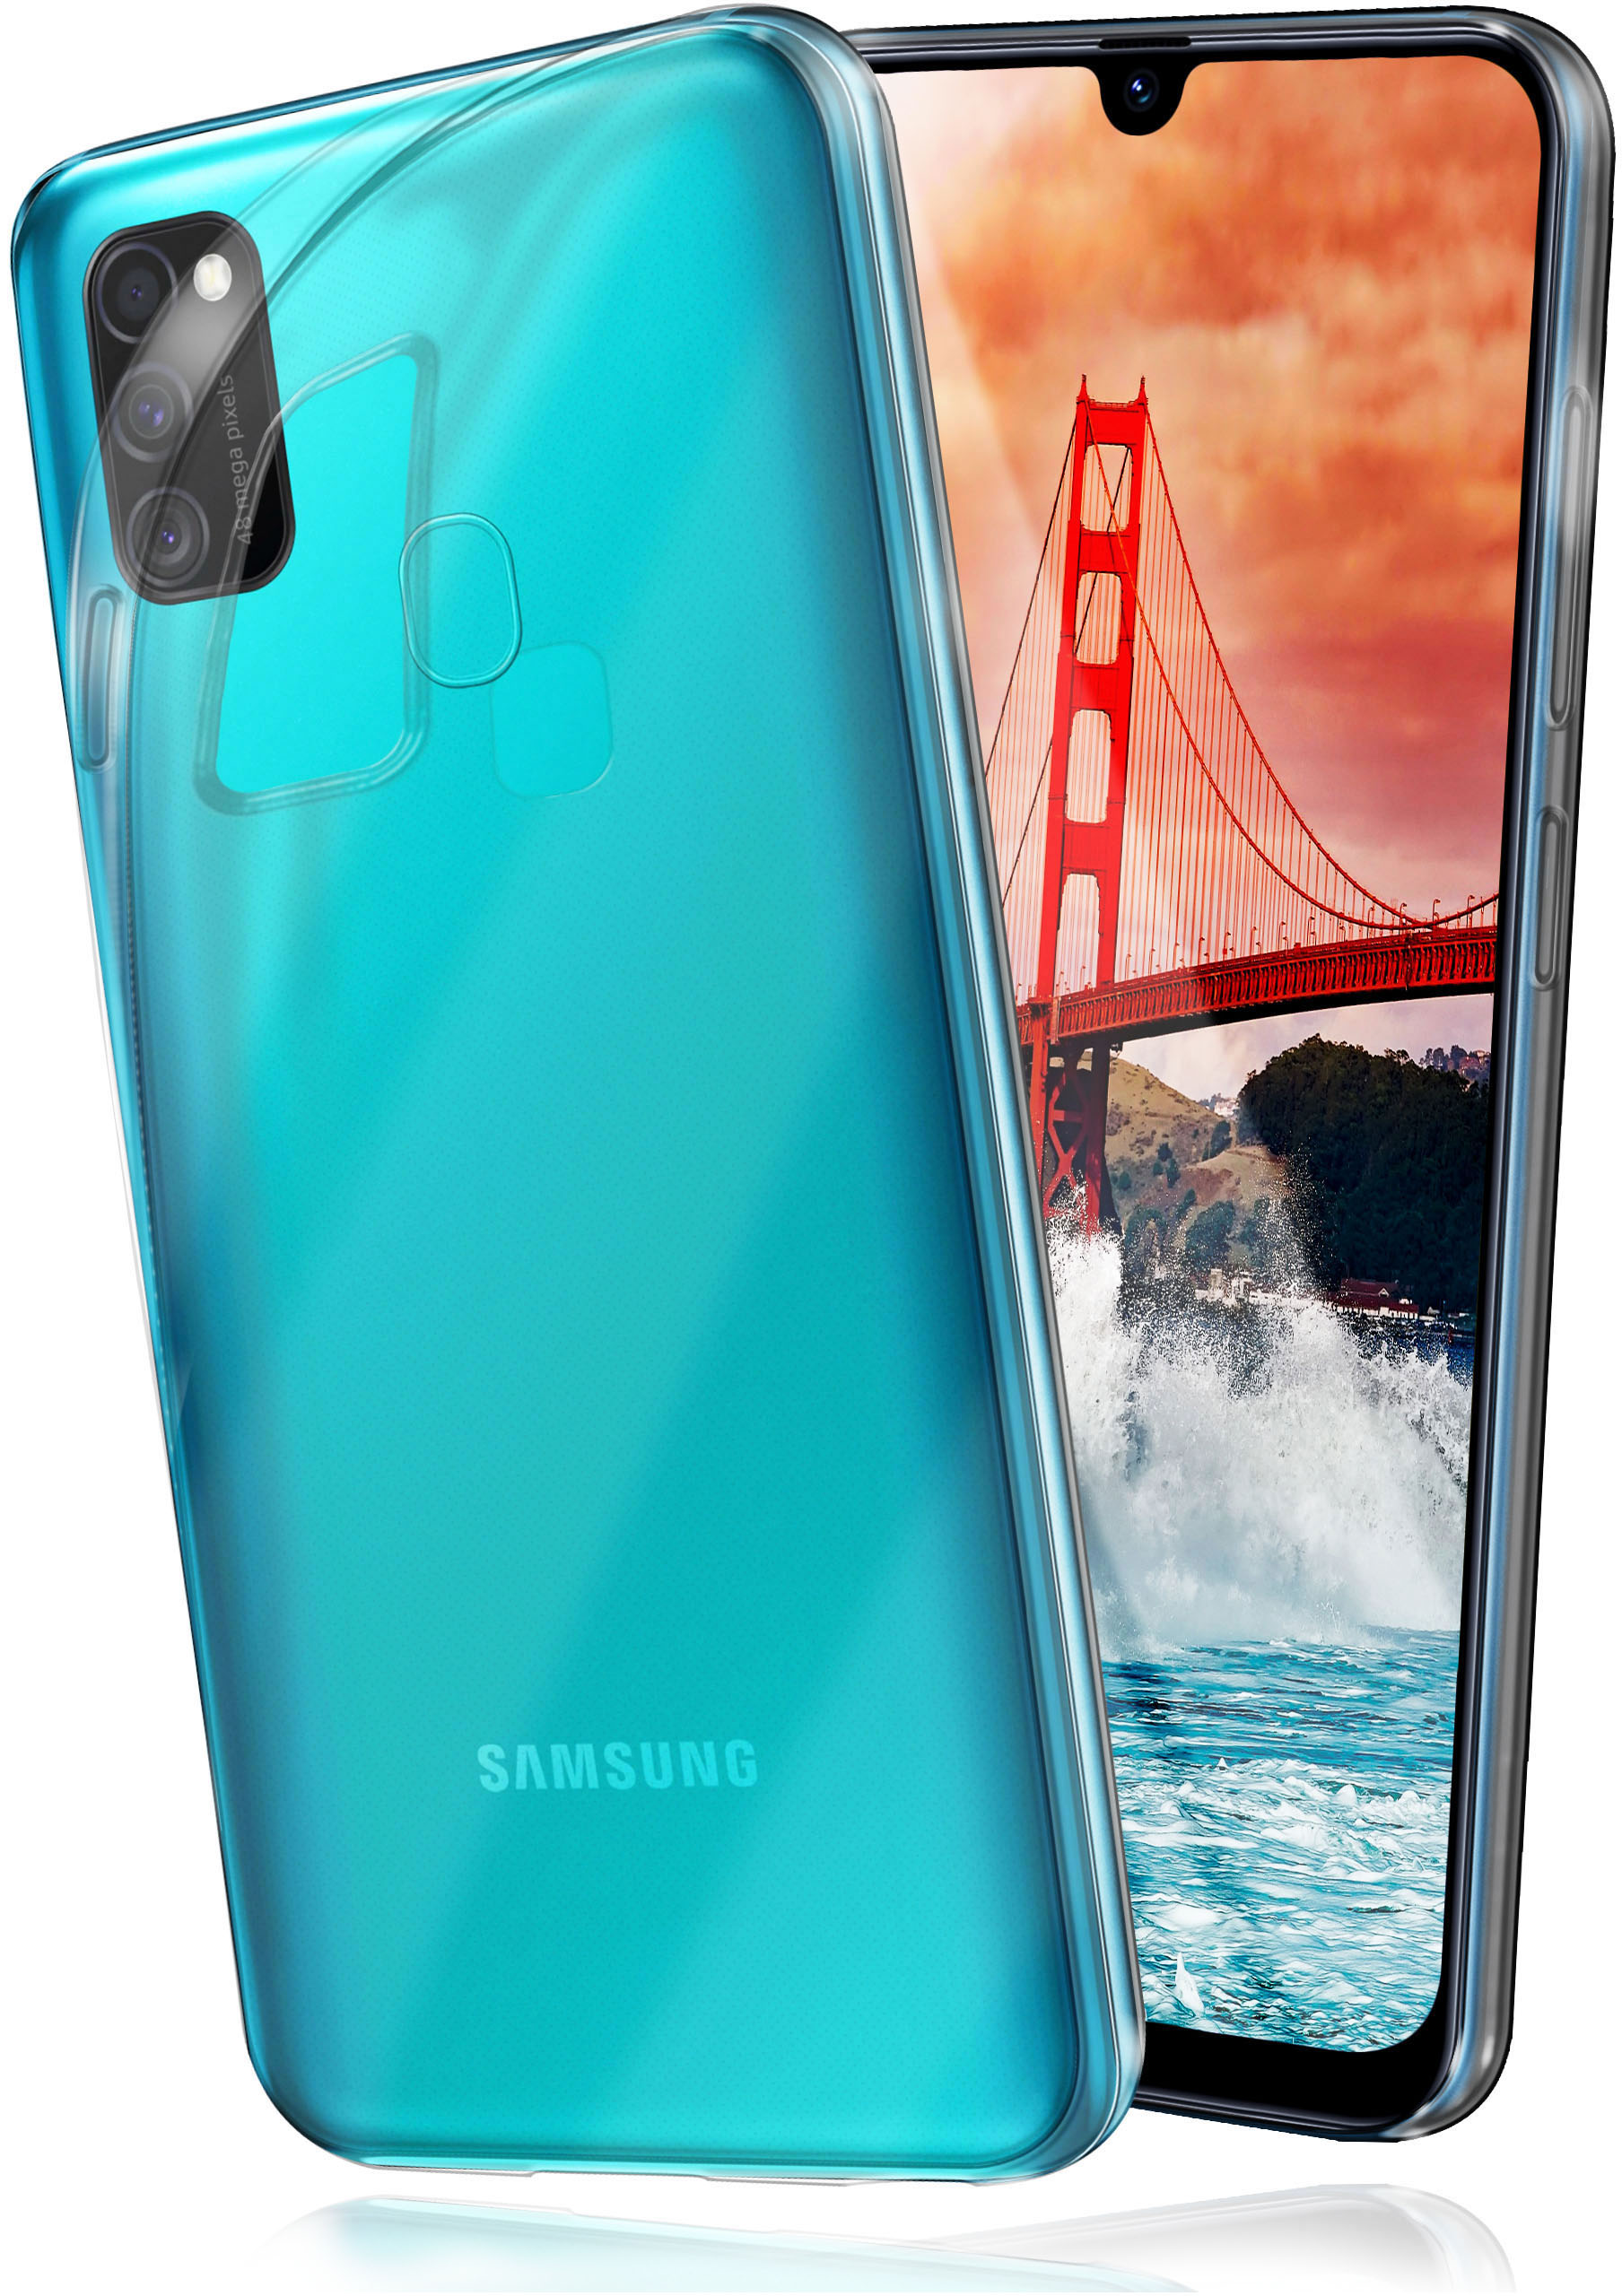 Case, Galaxy Crystal-Clear MOEX Backcover, Aero Samsung, M21,